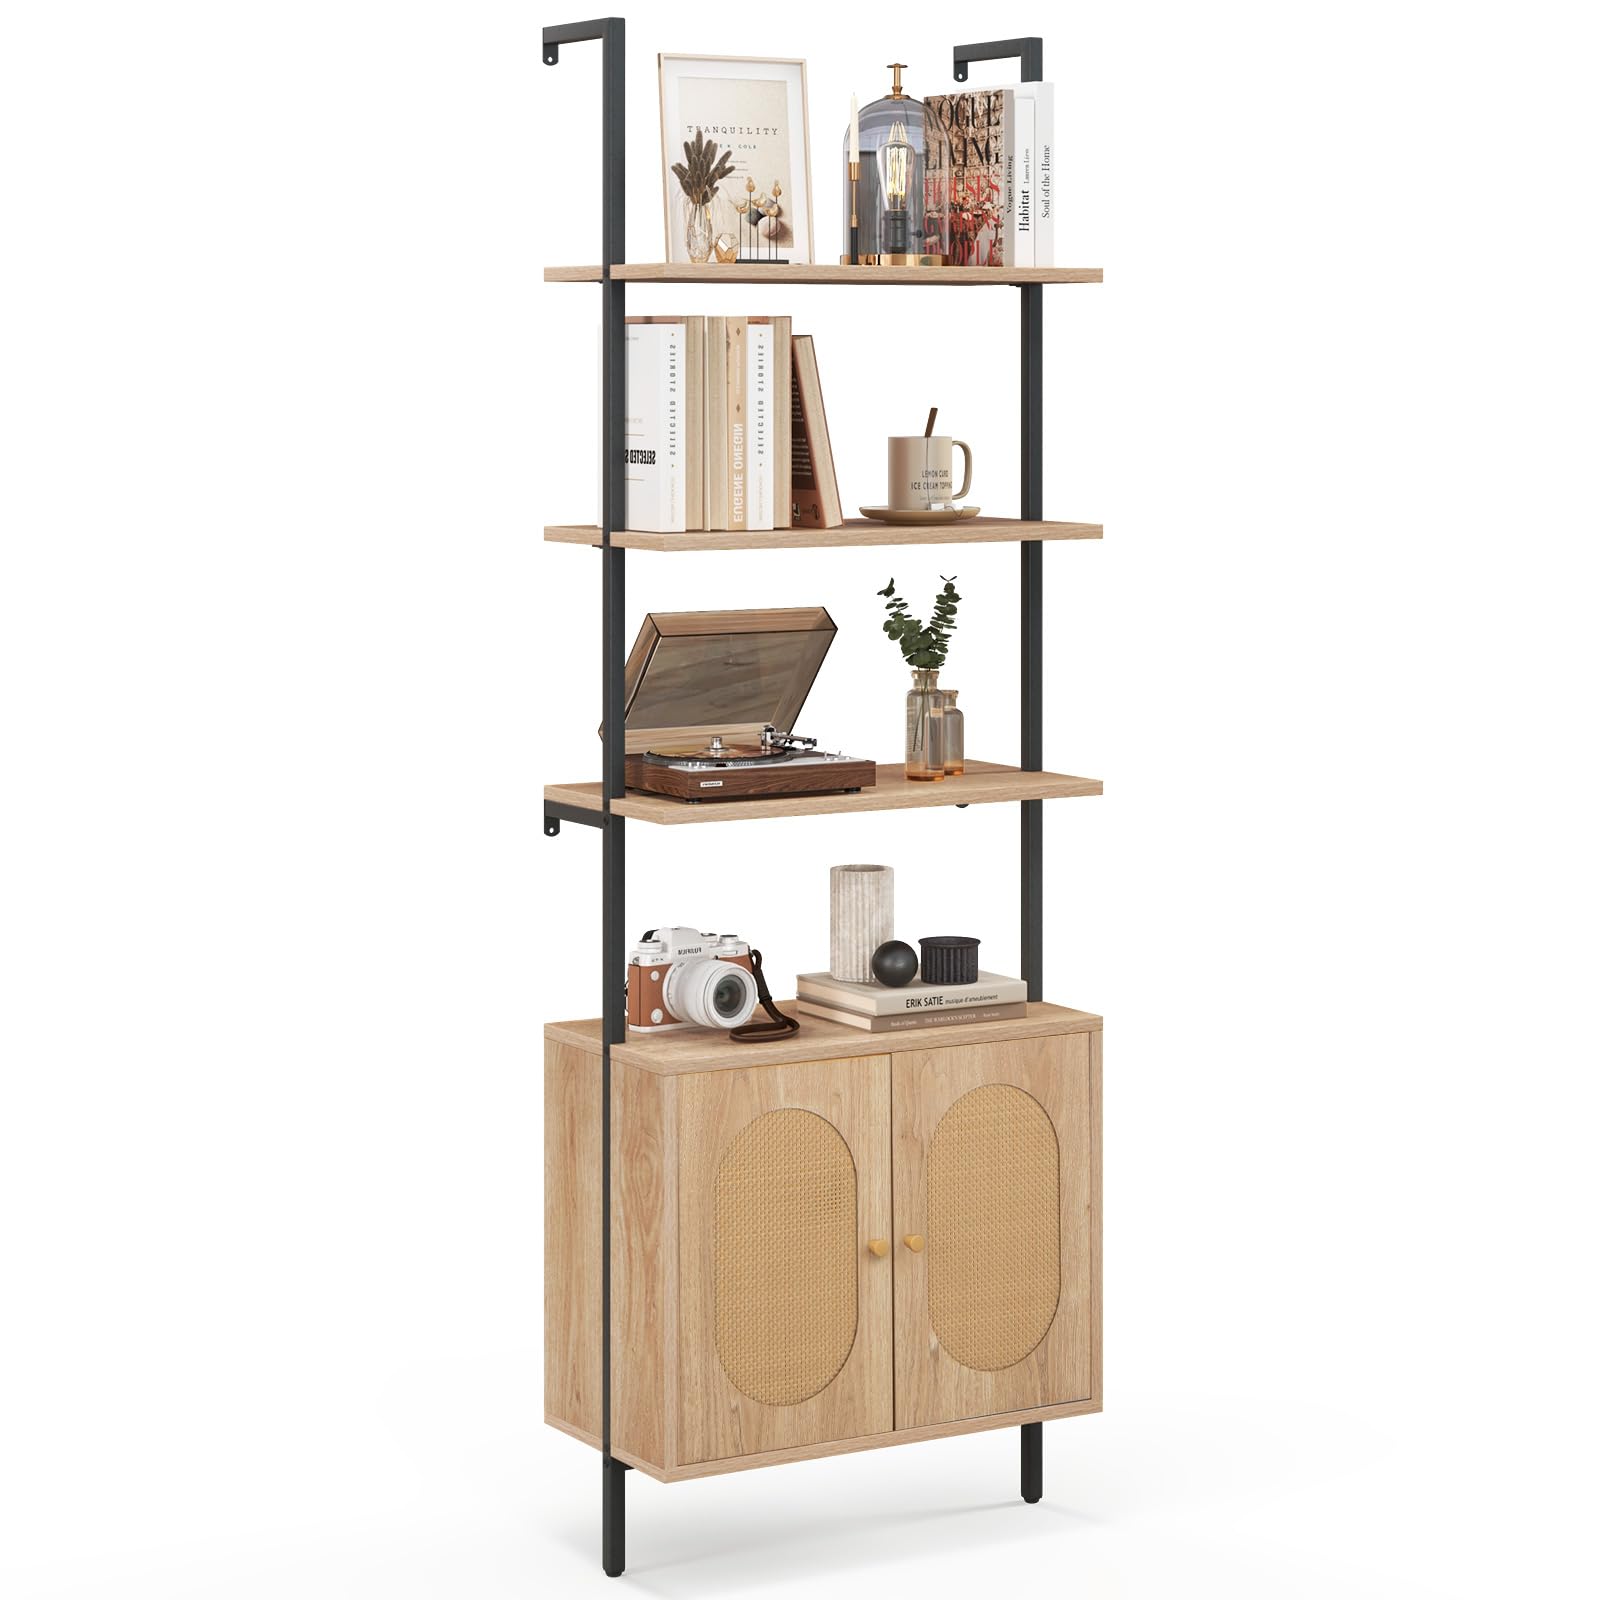 Giantex 71" Ladder Bookshelf with Cabinet